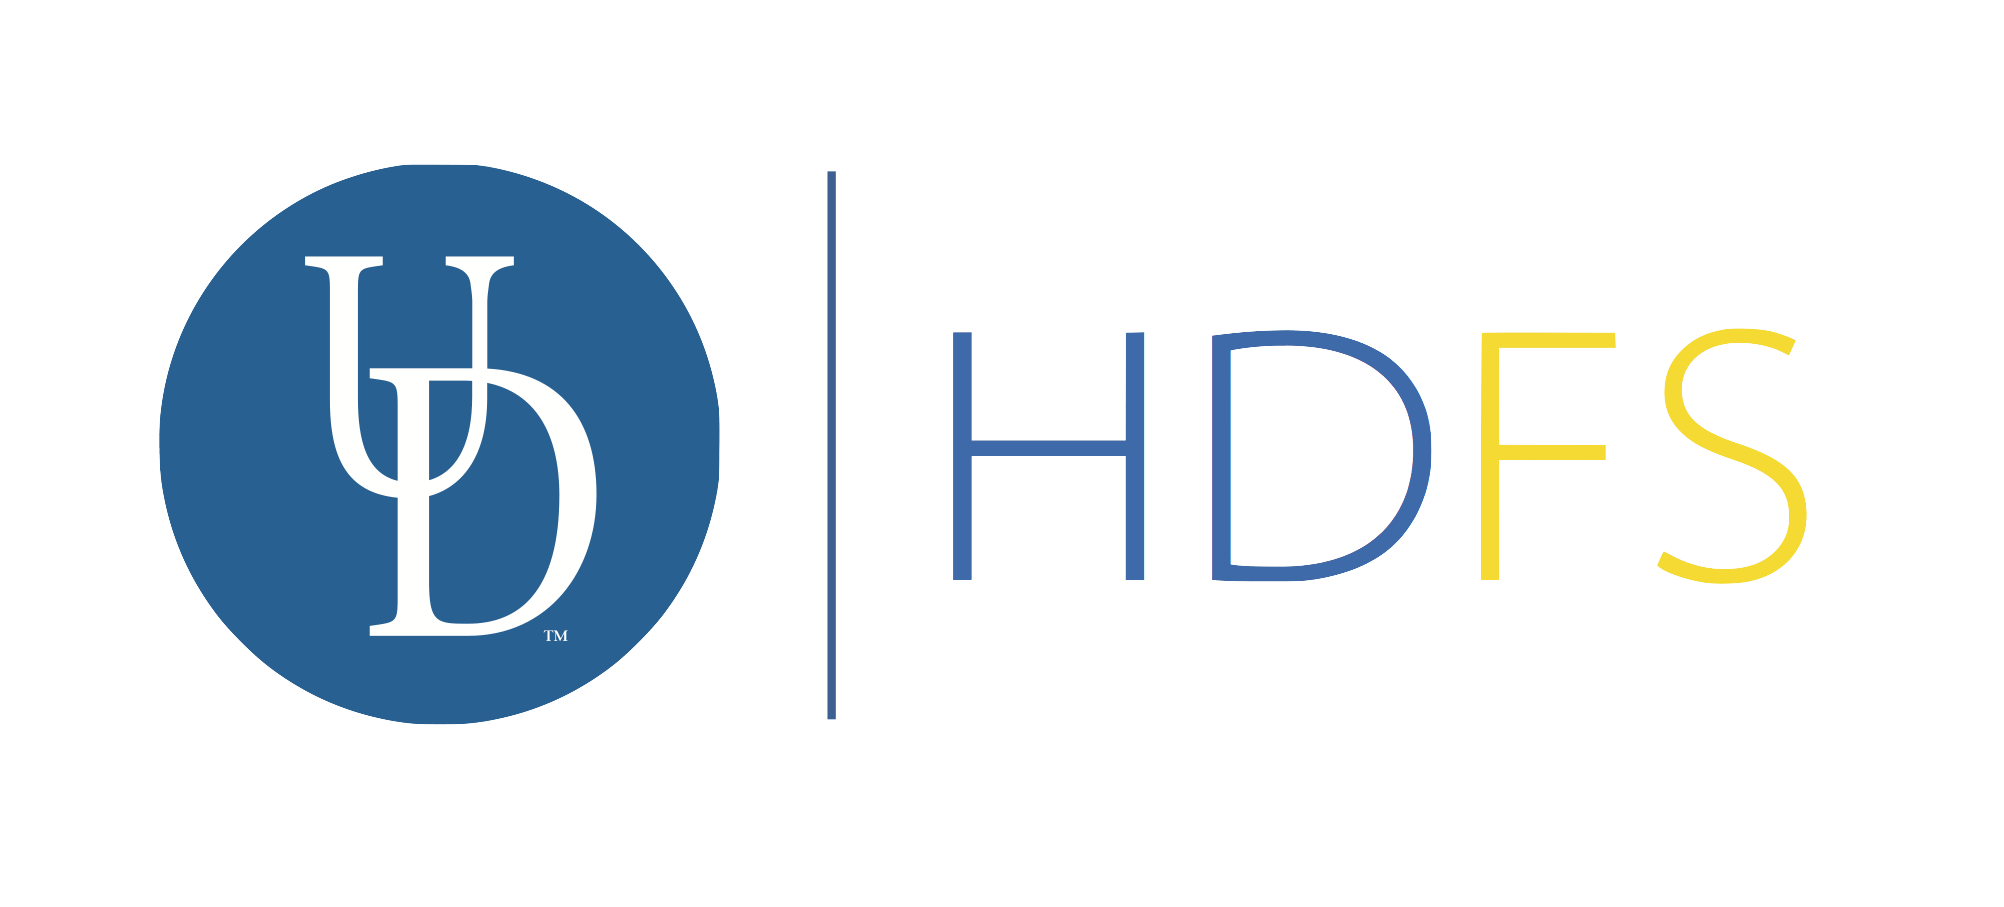 HDFS Logo - hdfs logo